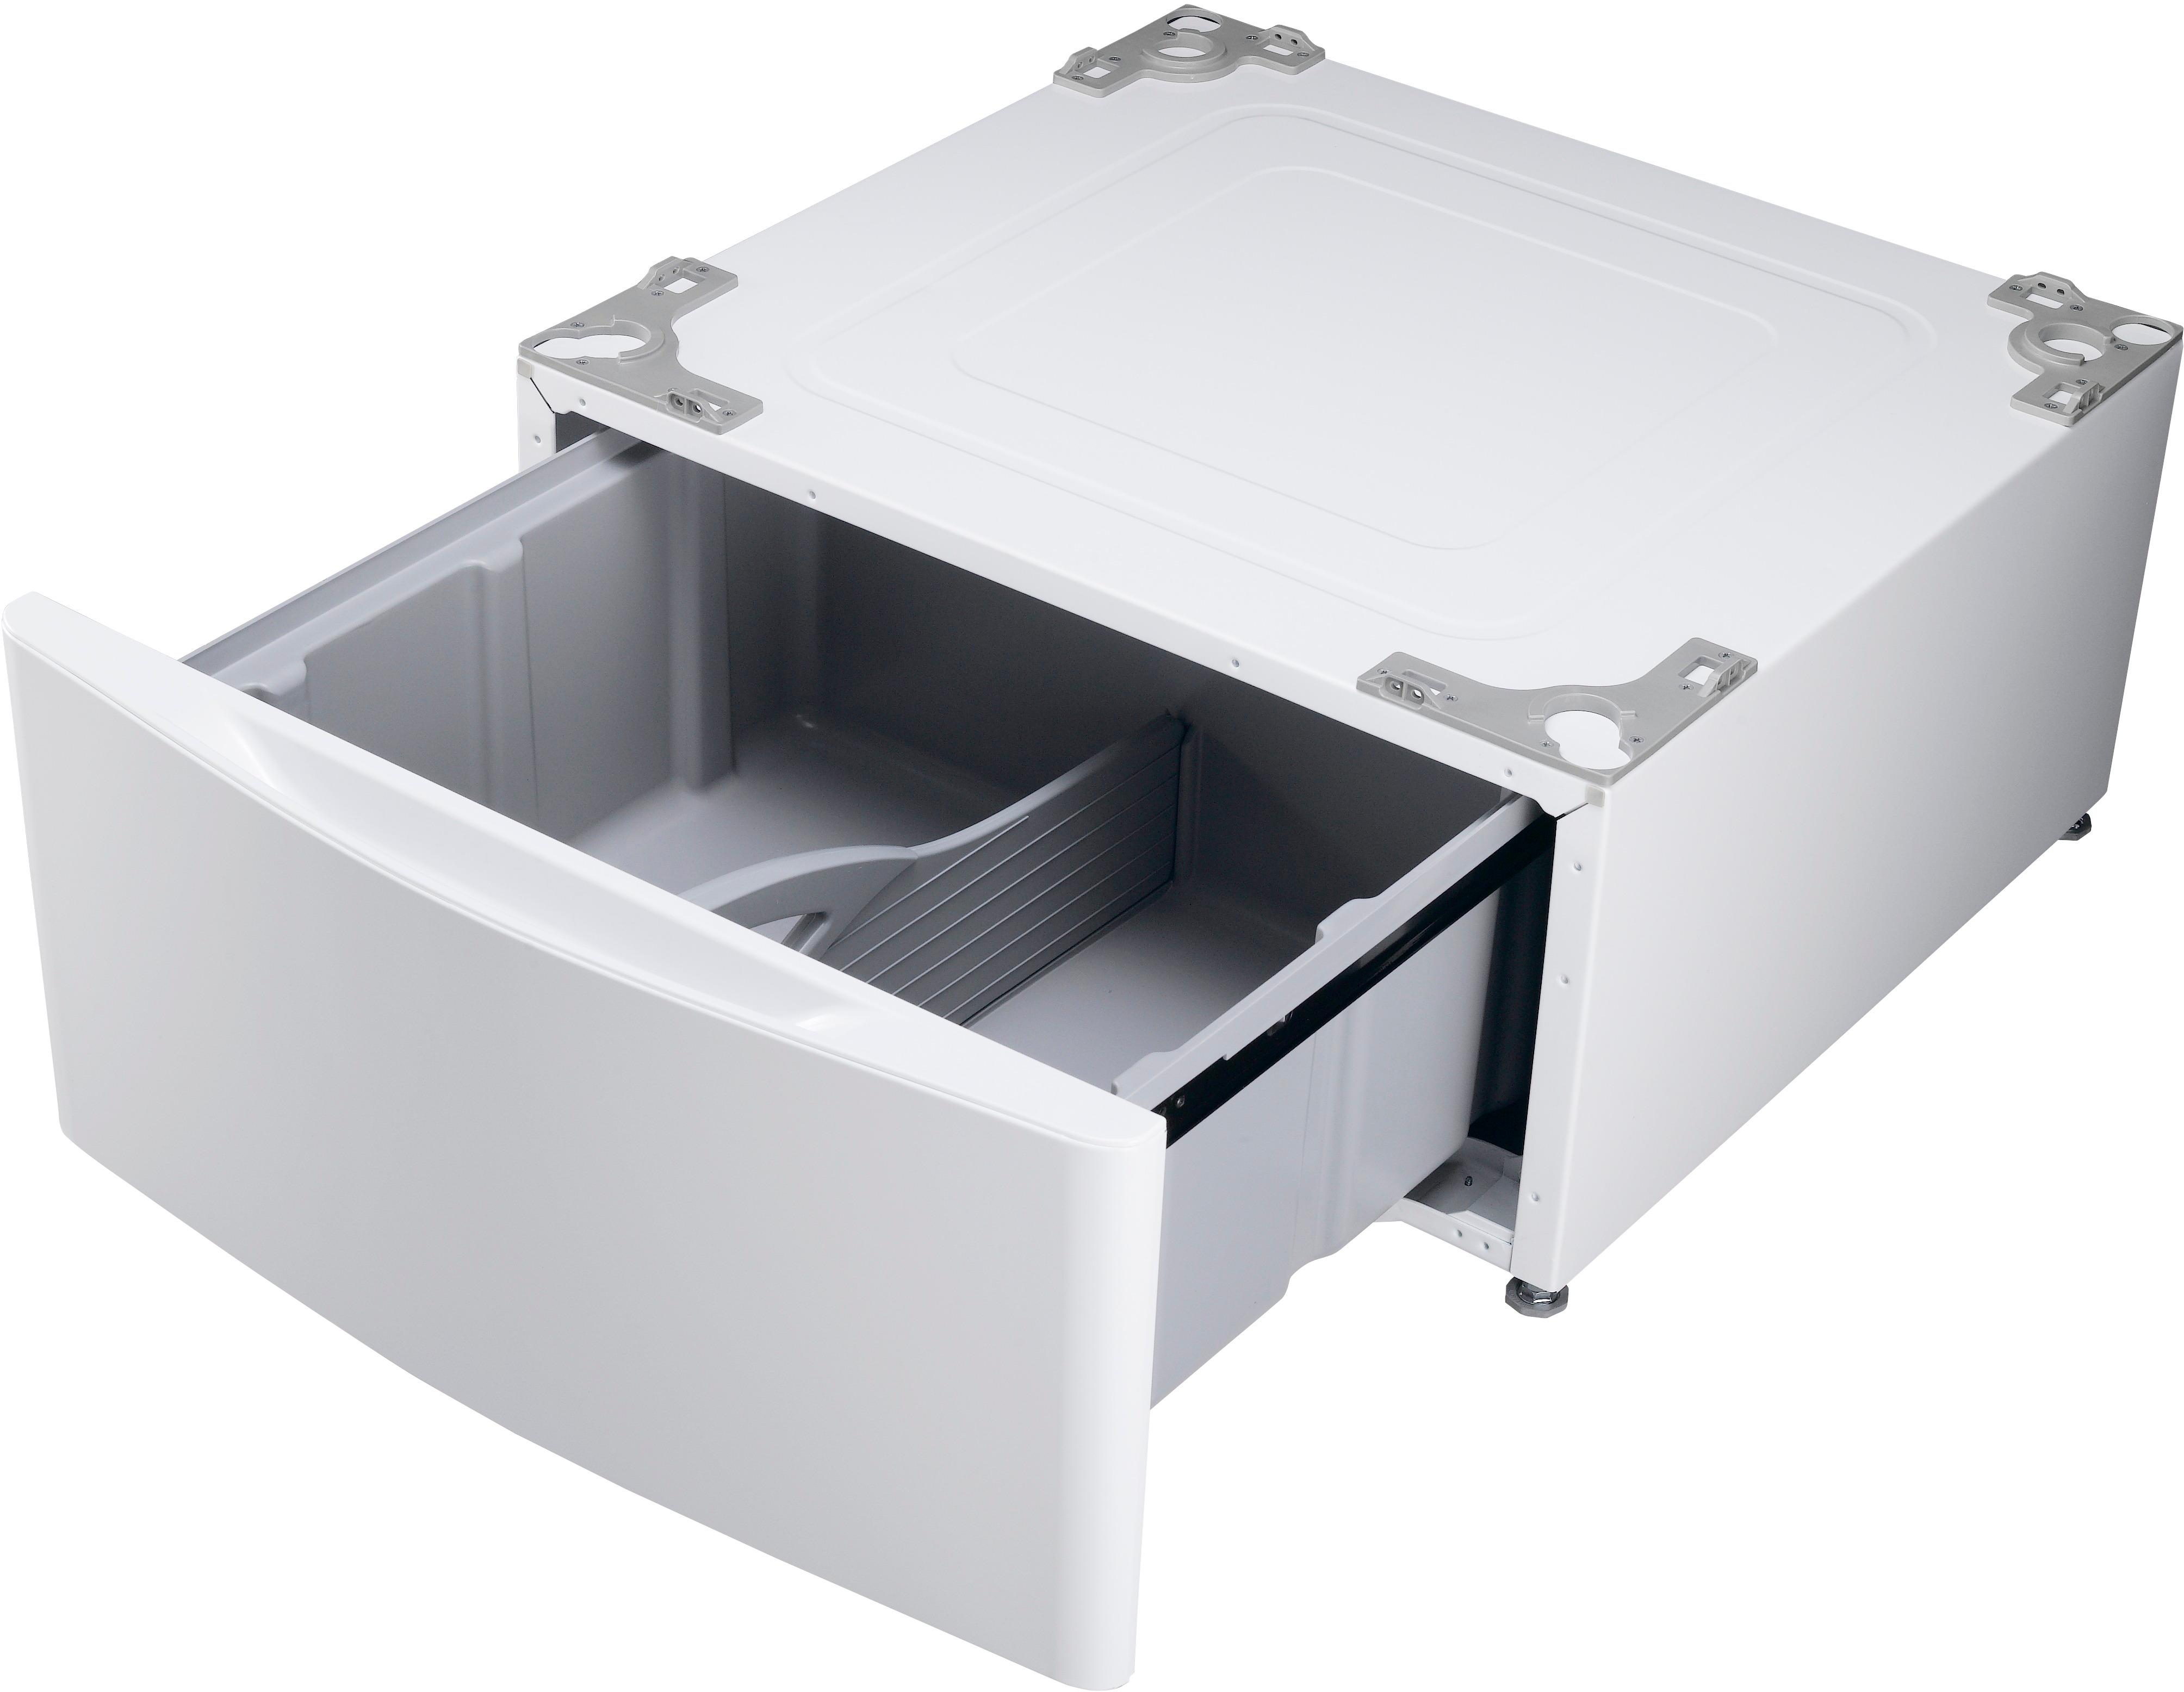 LG 27" Laundry Pedestal with Storage Drawer White WDP4W Best Buy